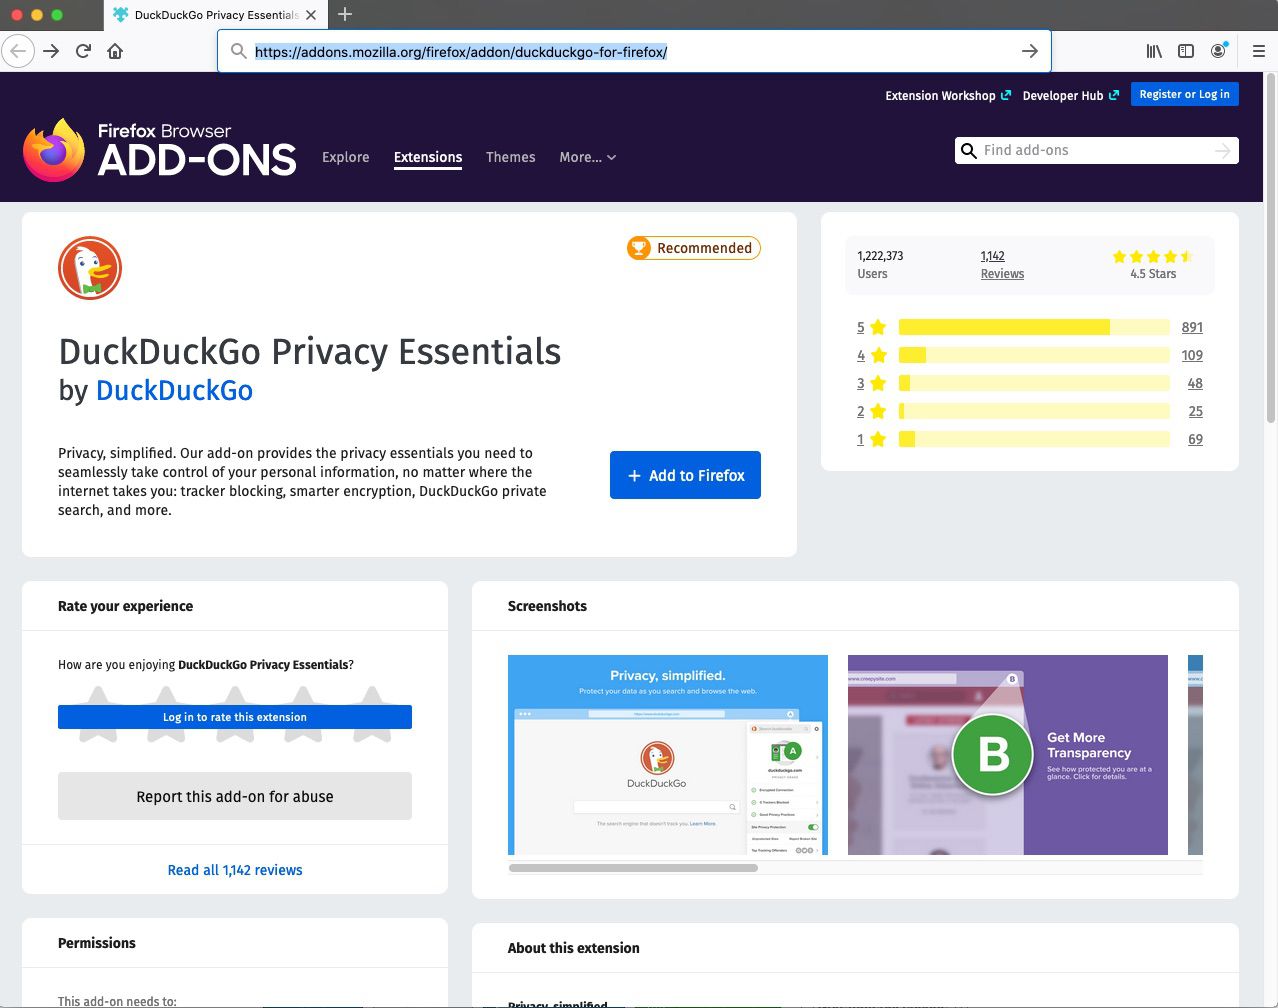 Vind DuckDuckGo Privacy Essentials op de Mozilla Firefox Add-On-pagina.